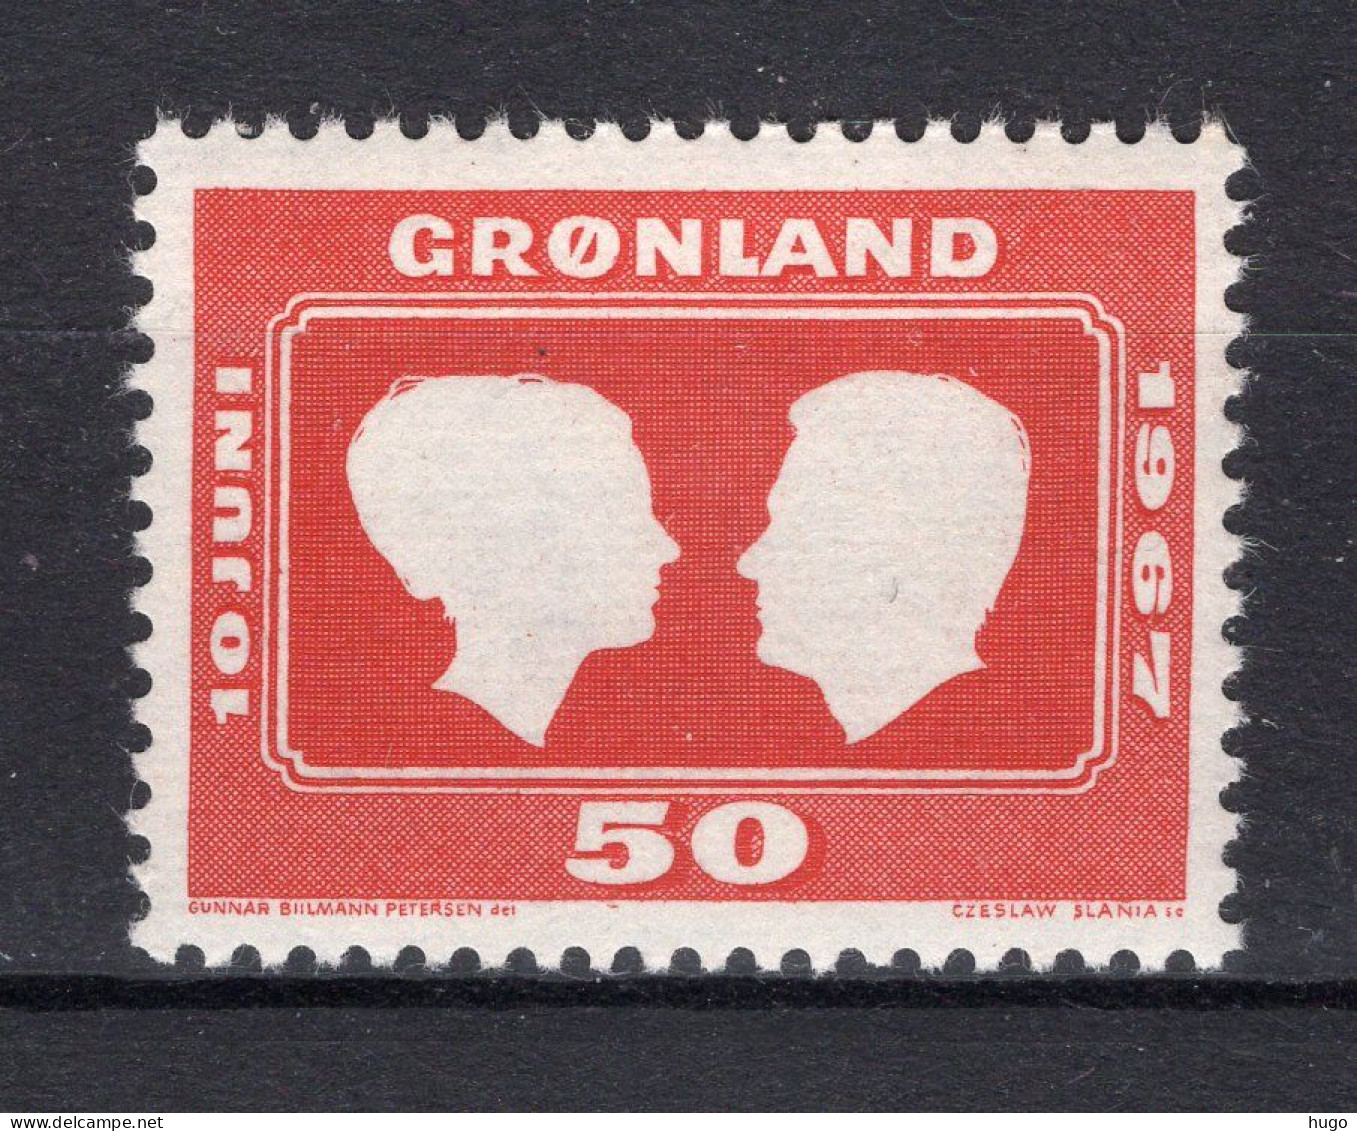 DENEMARKEN-GROENLAND 59 MNH 1967 -3 - Ongebruikt